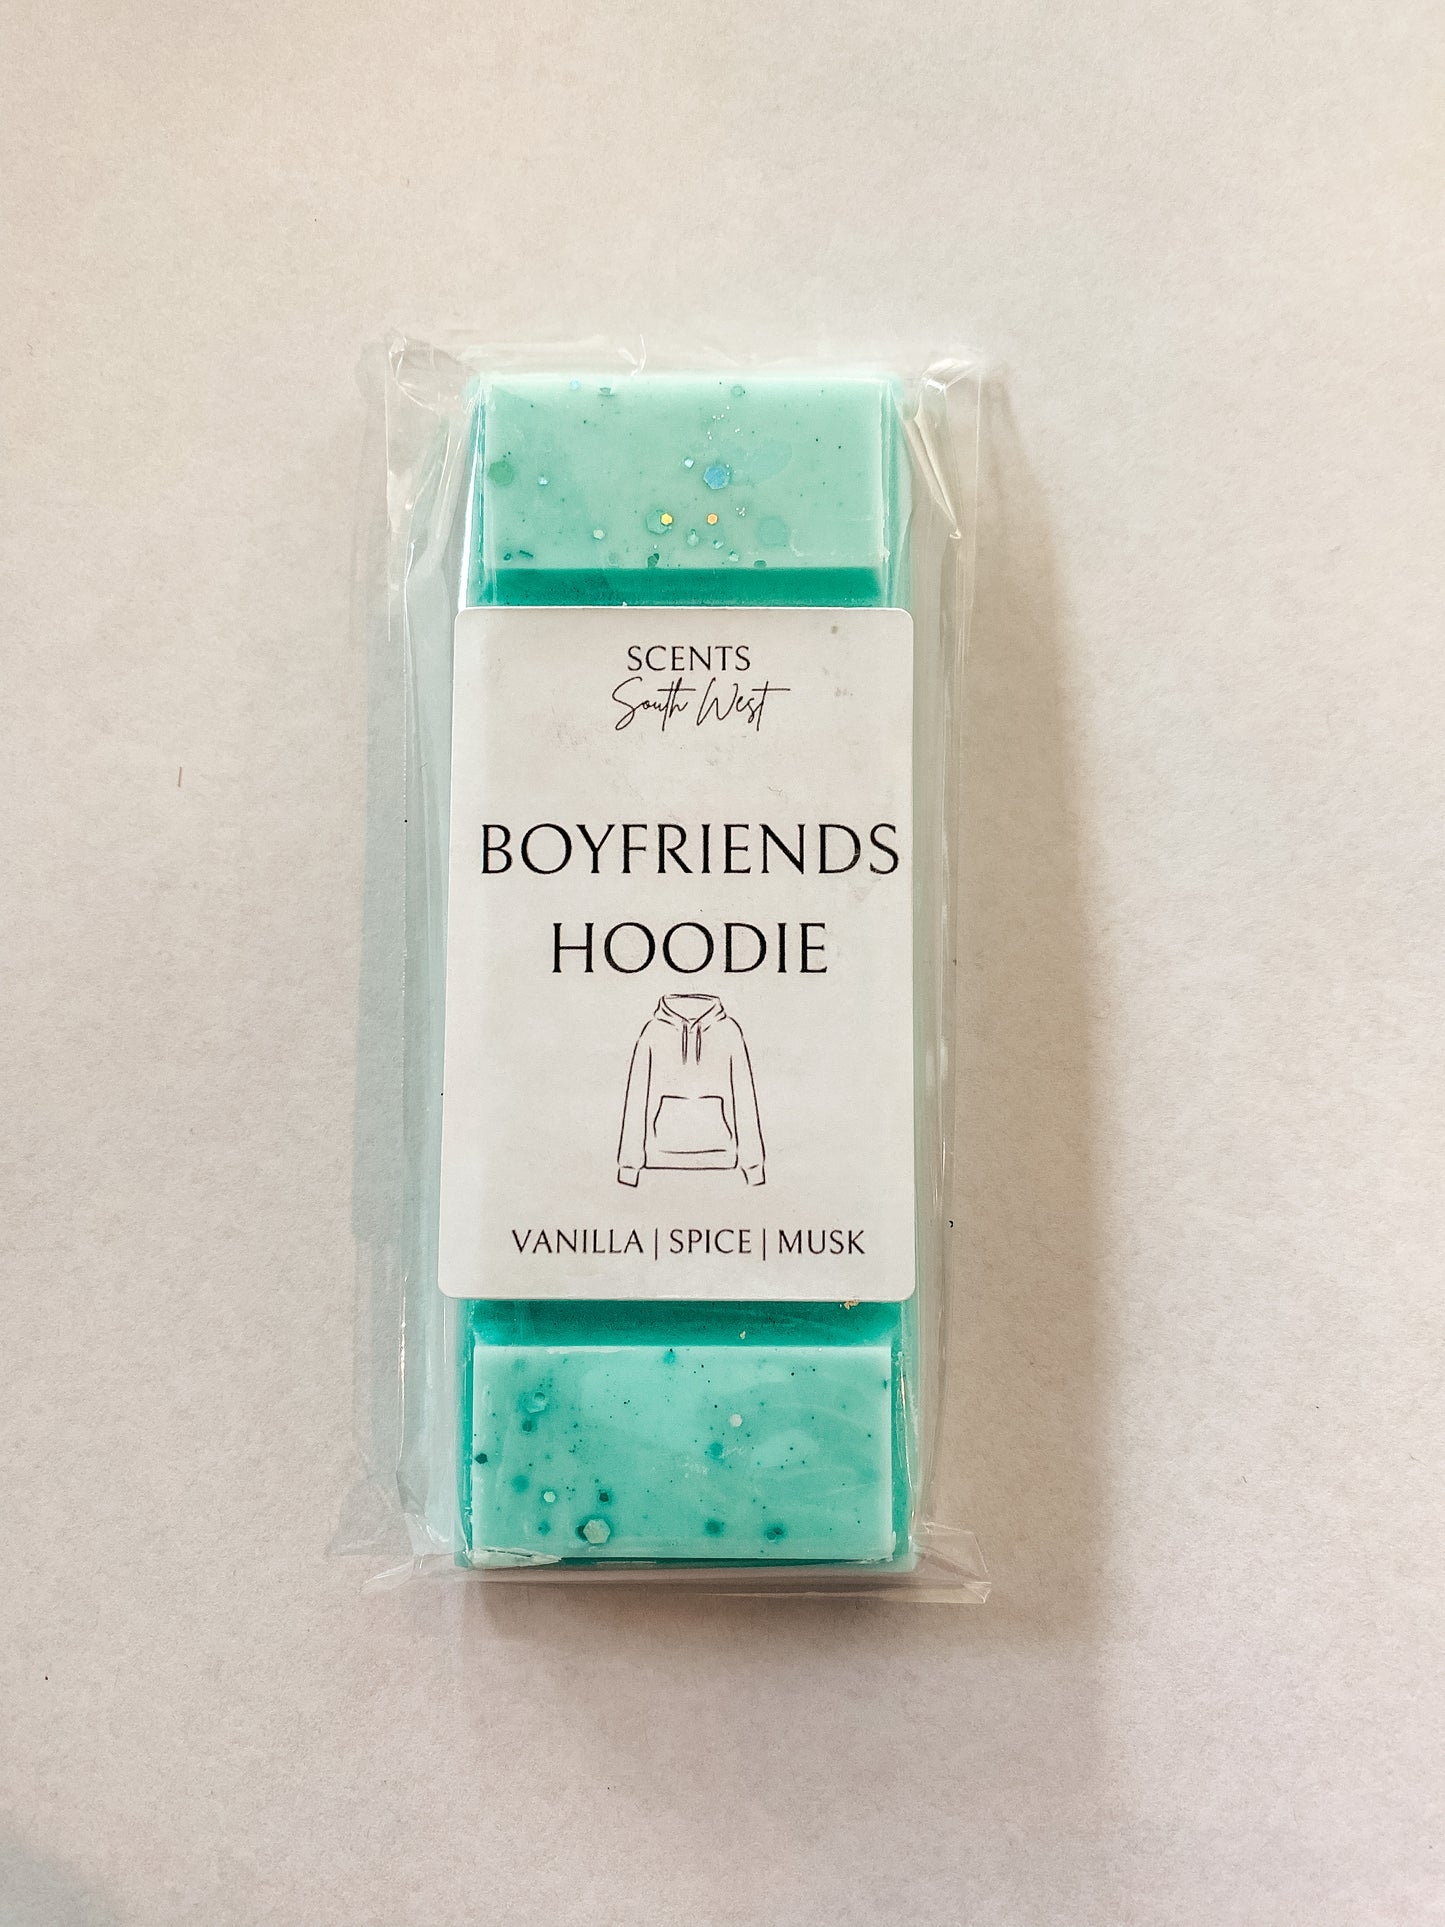 Boyfriends hoodie